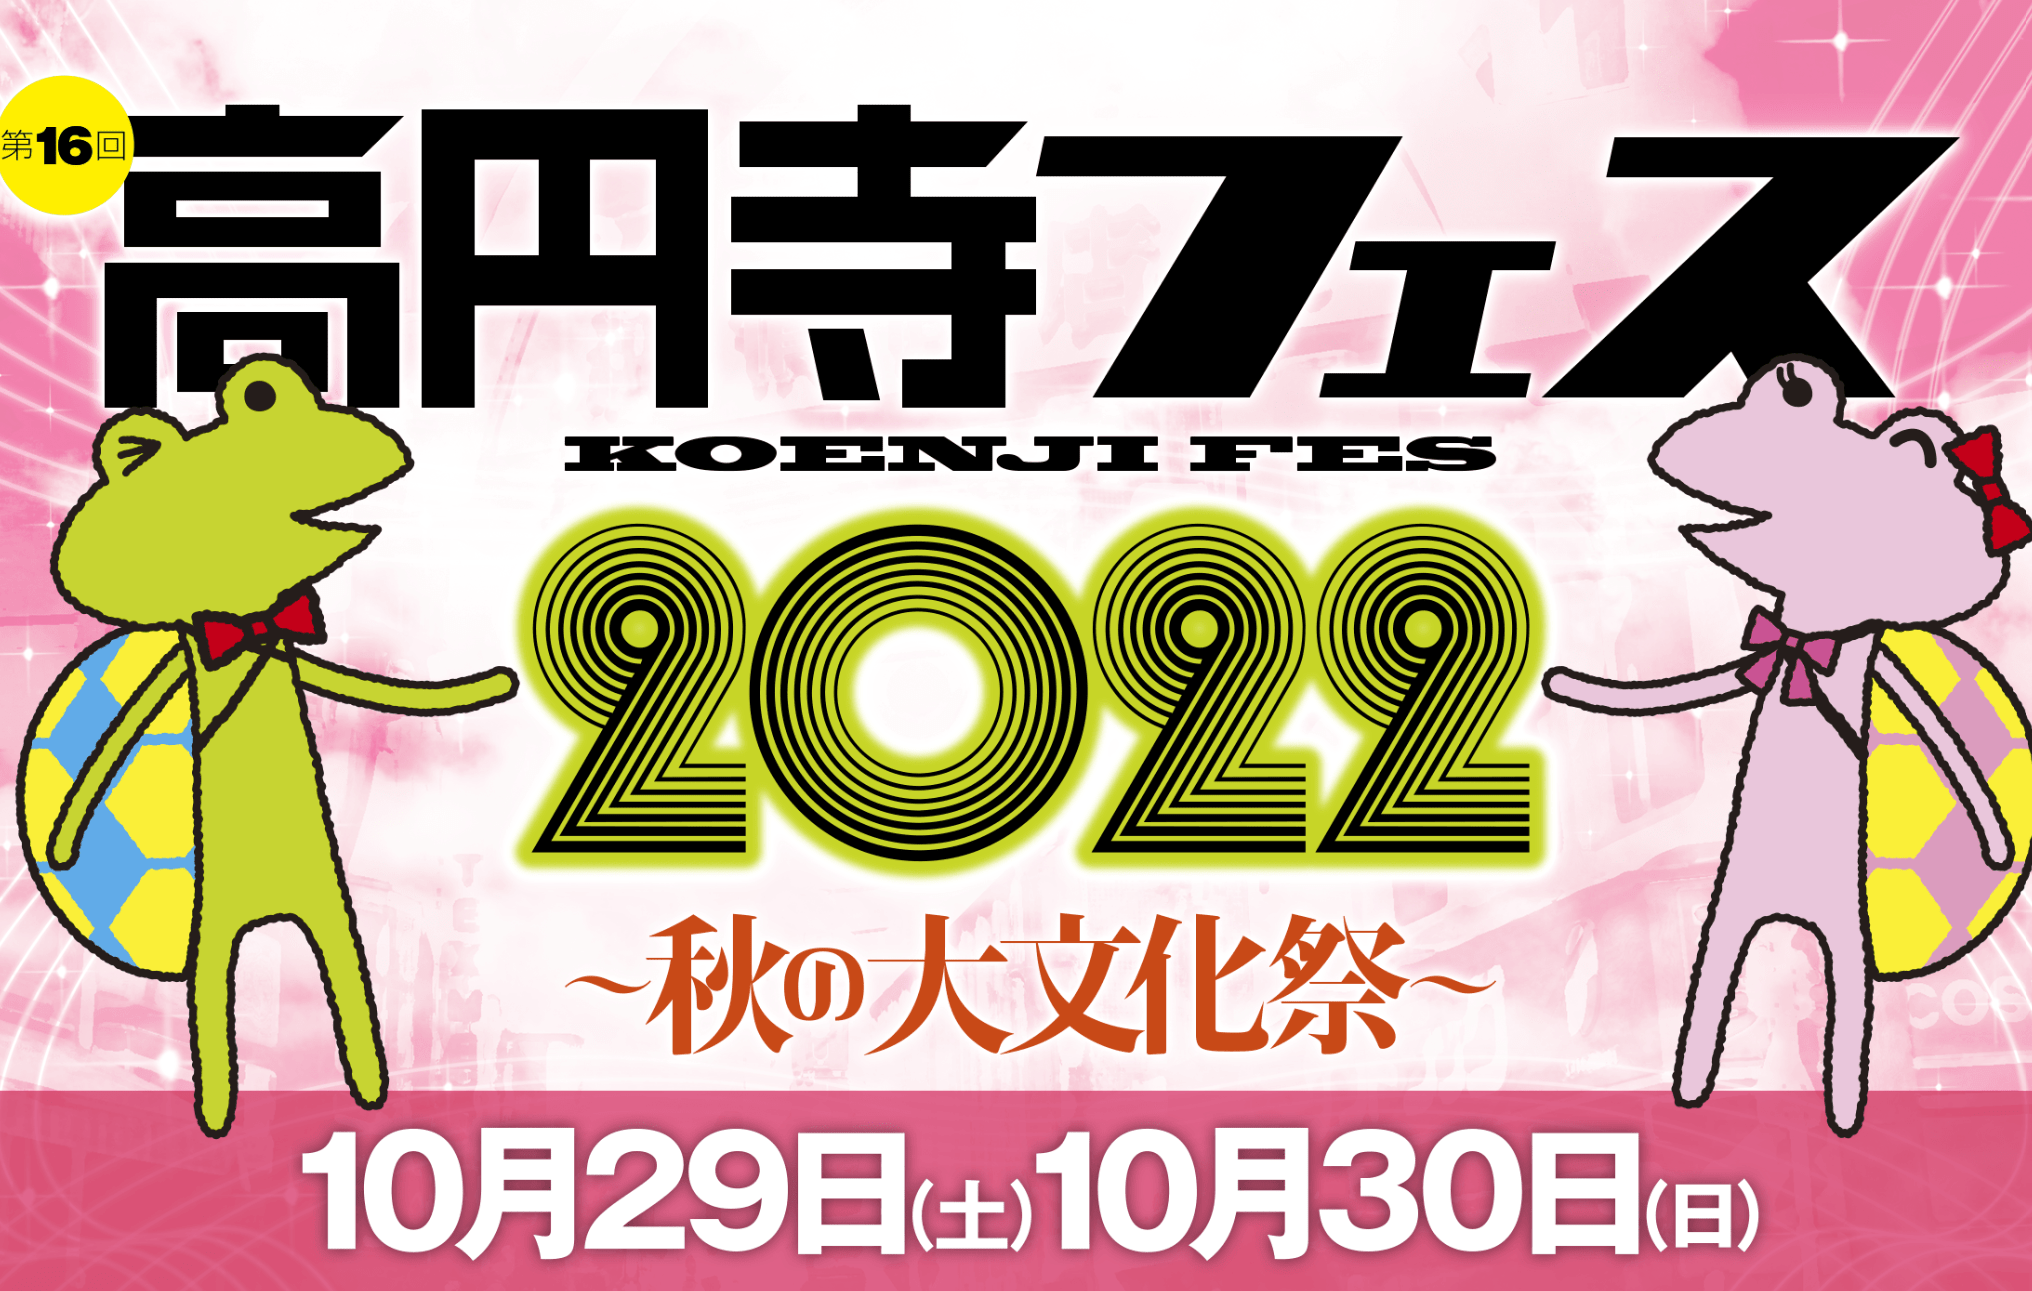 Koenji Fes 2022